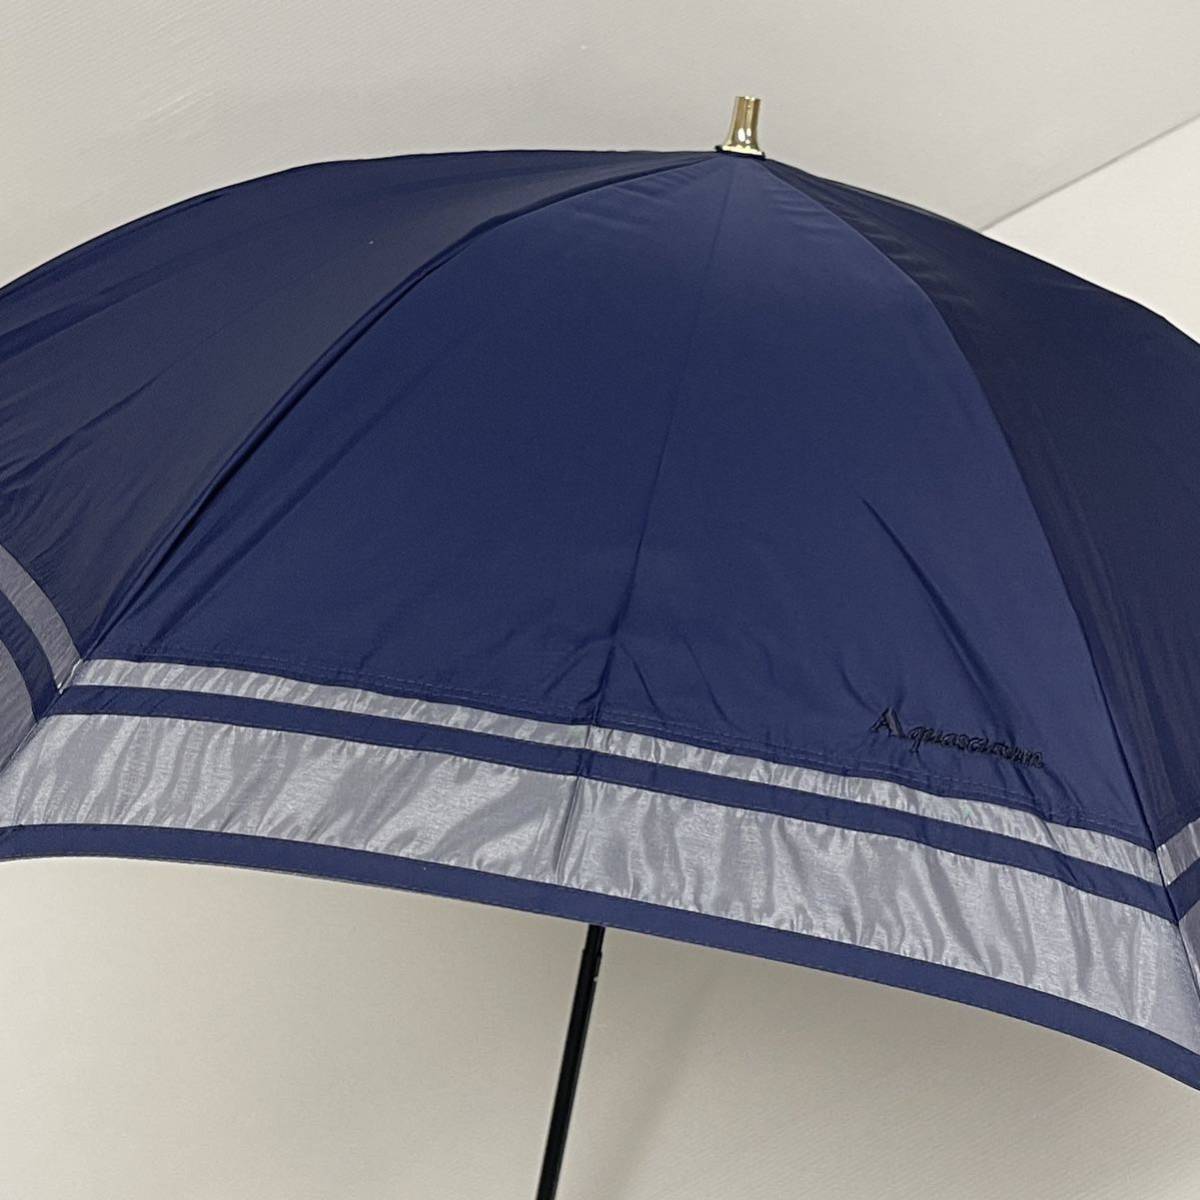  new goods 52074 Aquascutum Aquascutum* navy blue navy auger nji- summer shield 1 class shade . rain combined use parasol small gran shade ....